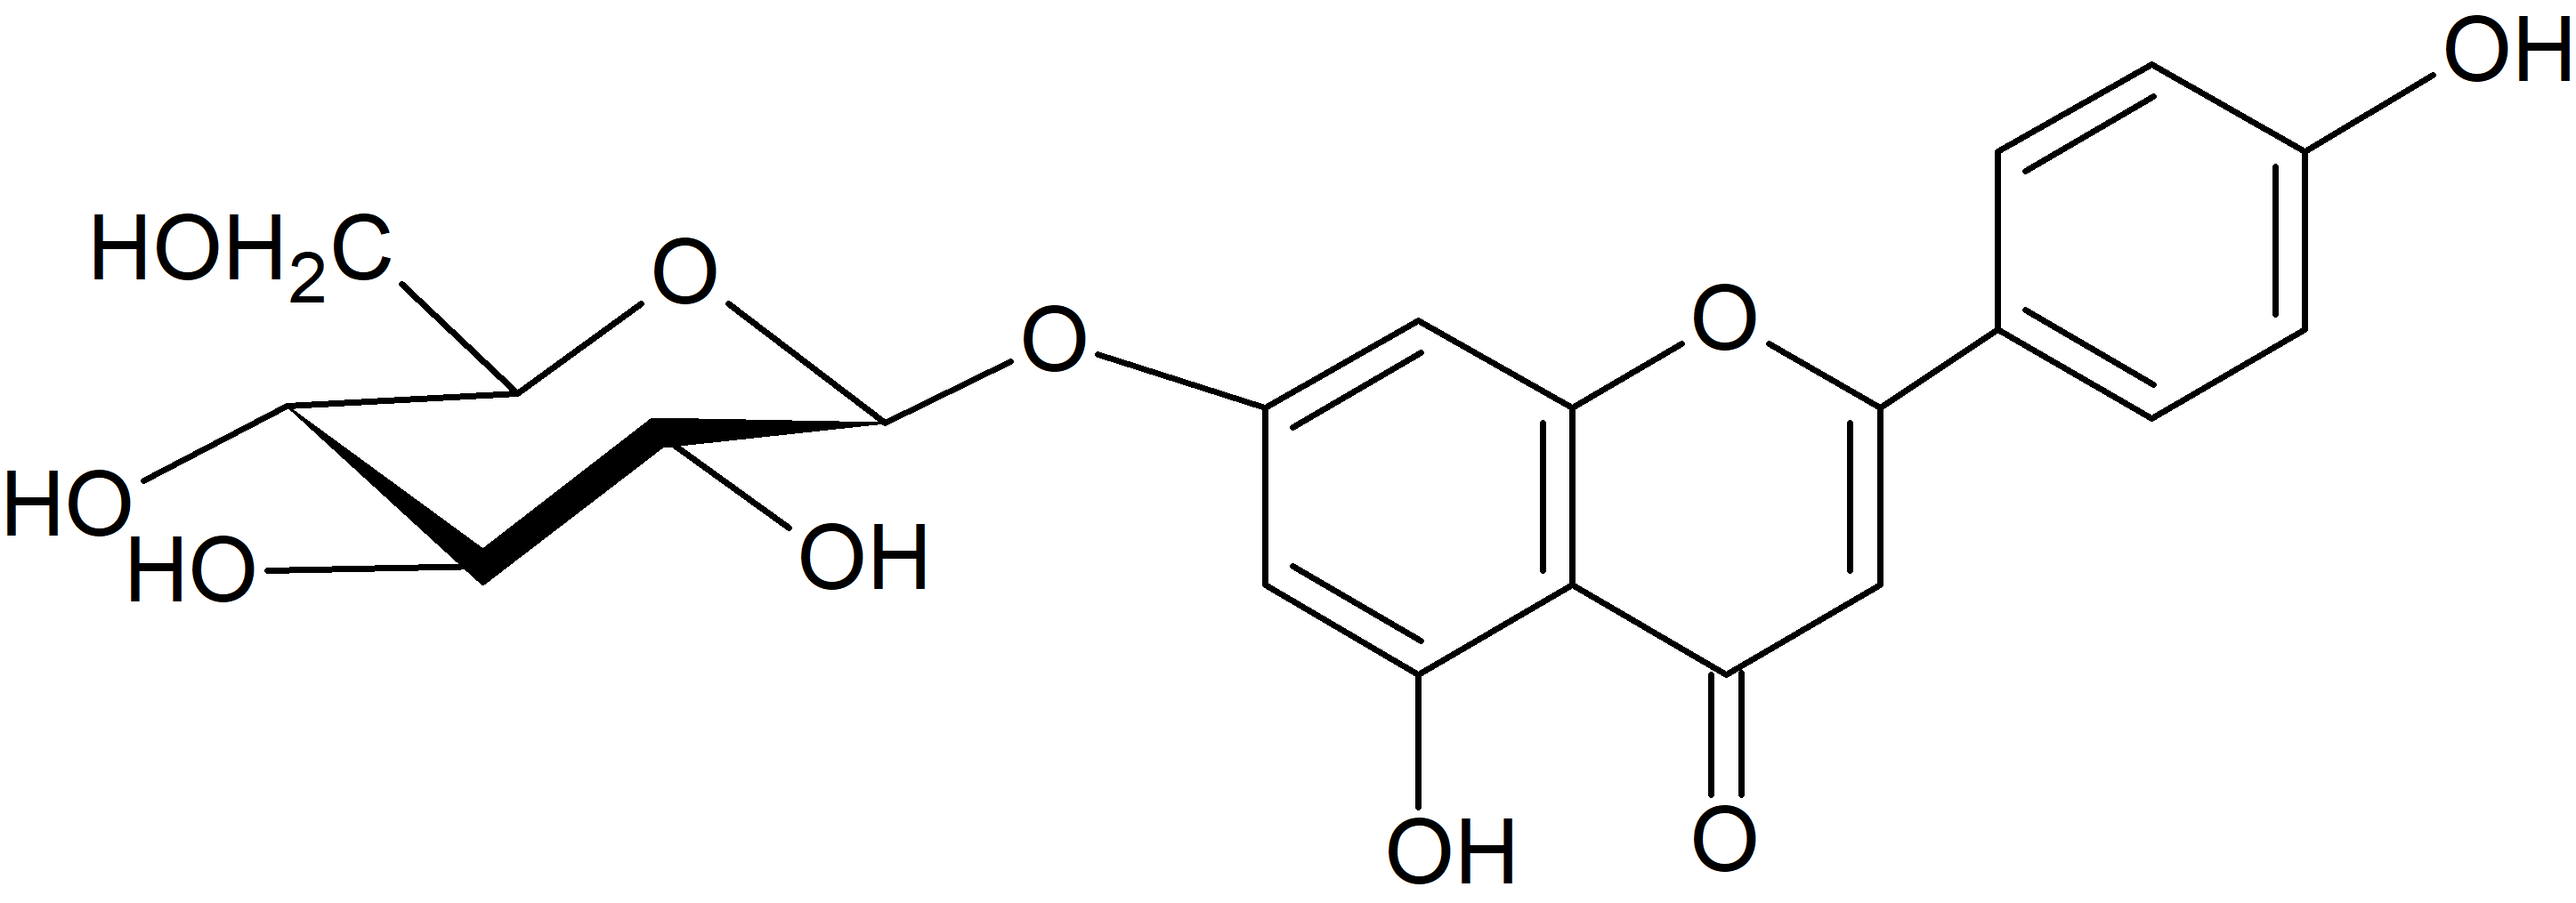 Apigenin 7-O-glucoside